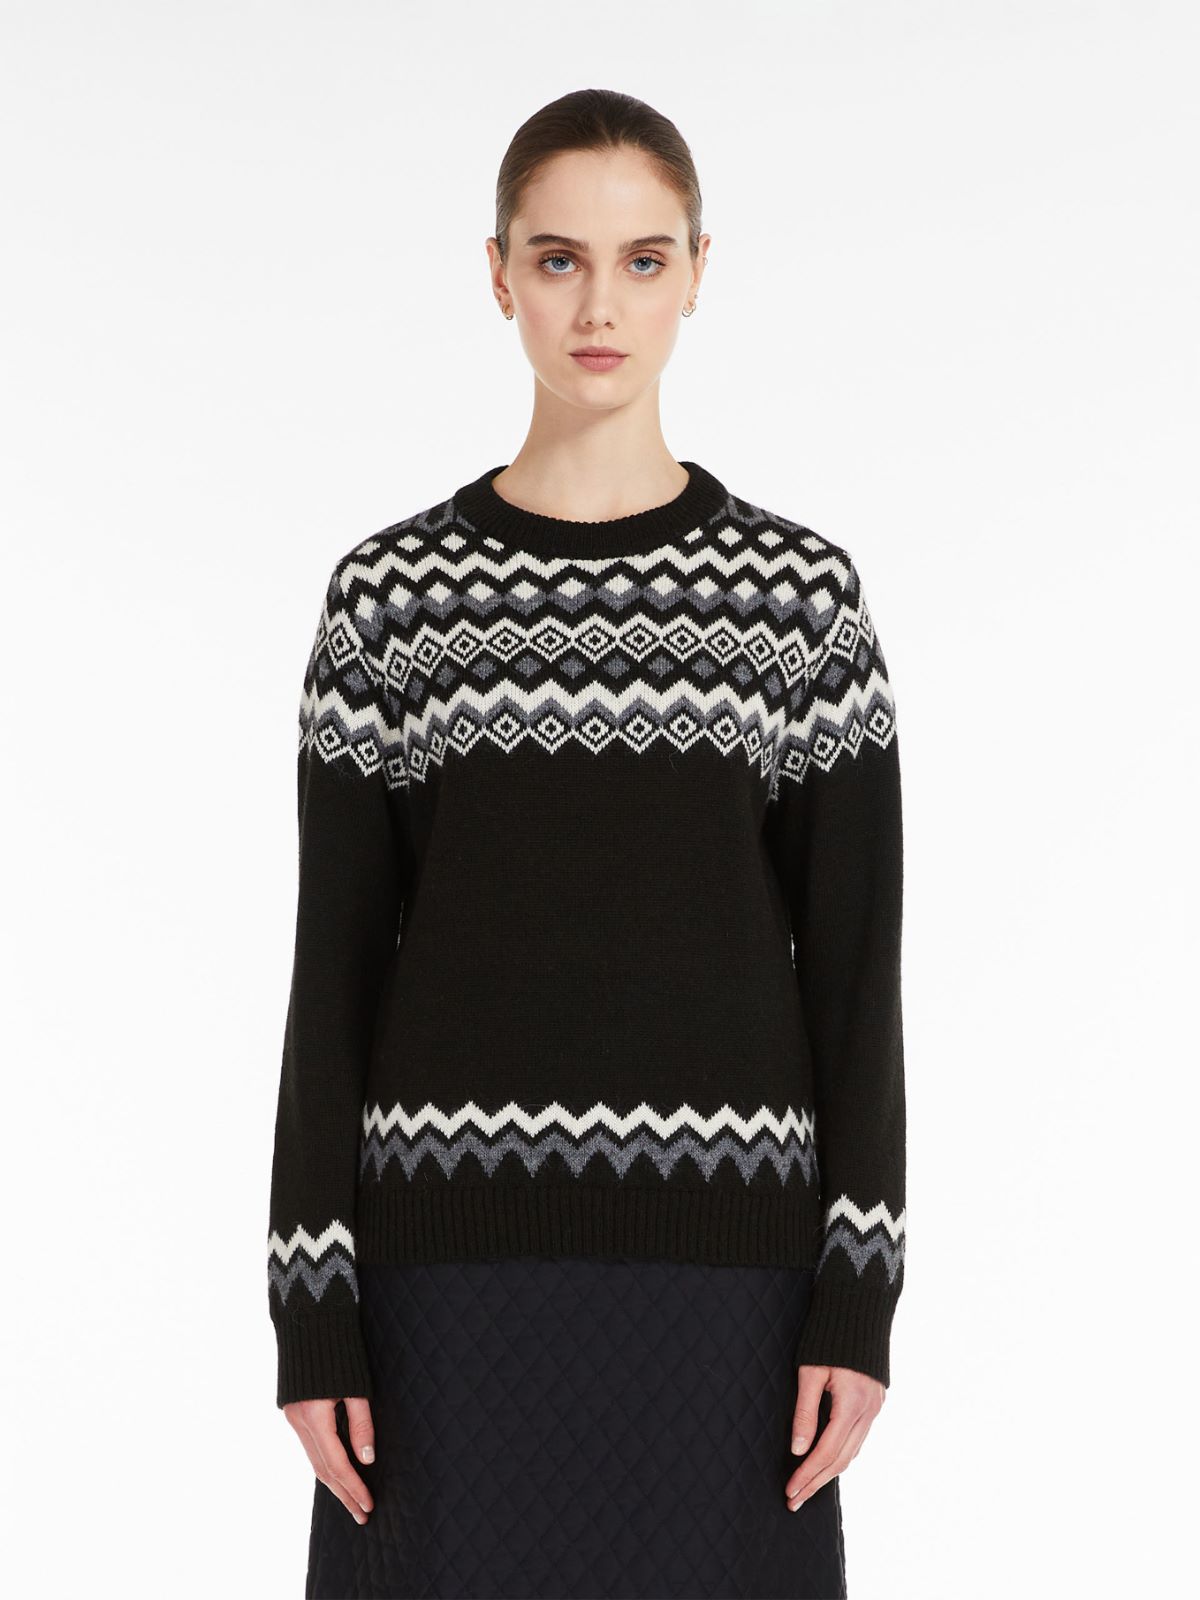 Jacquard alpaca and wool sweater, black | Weekend Max Mara